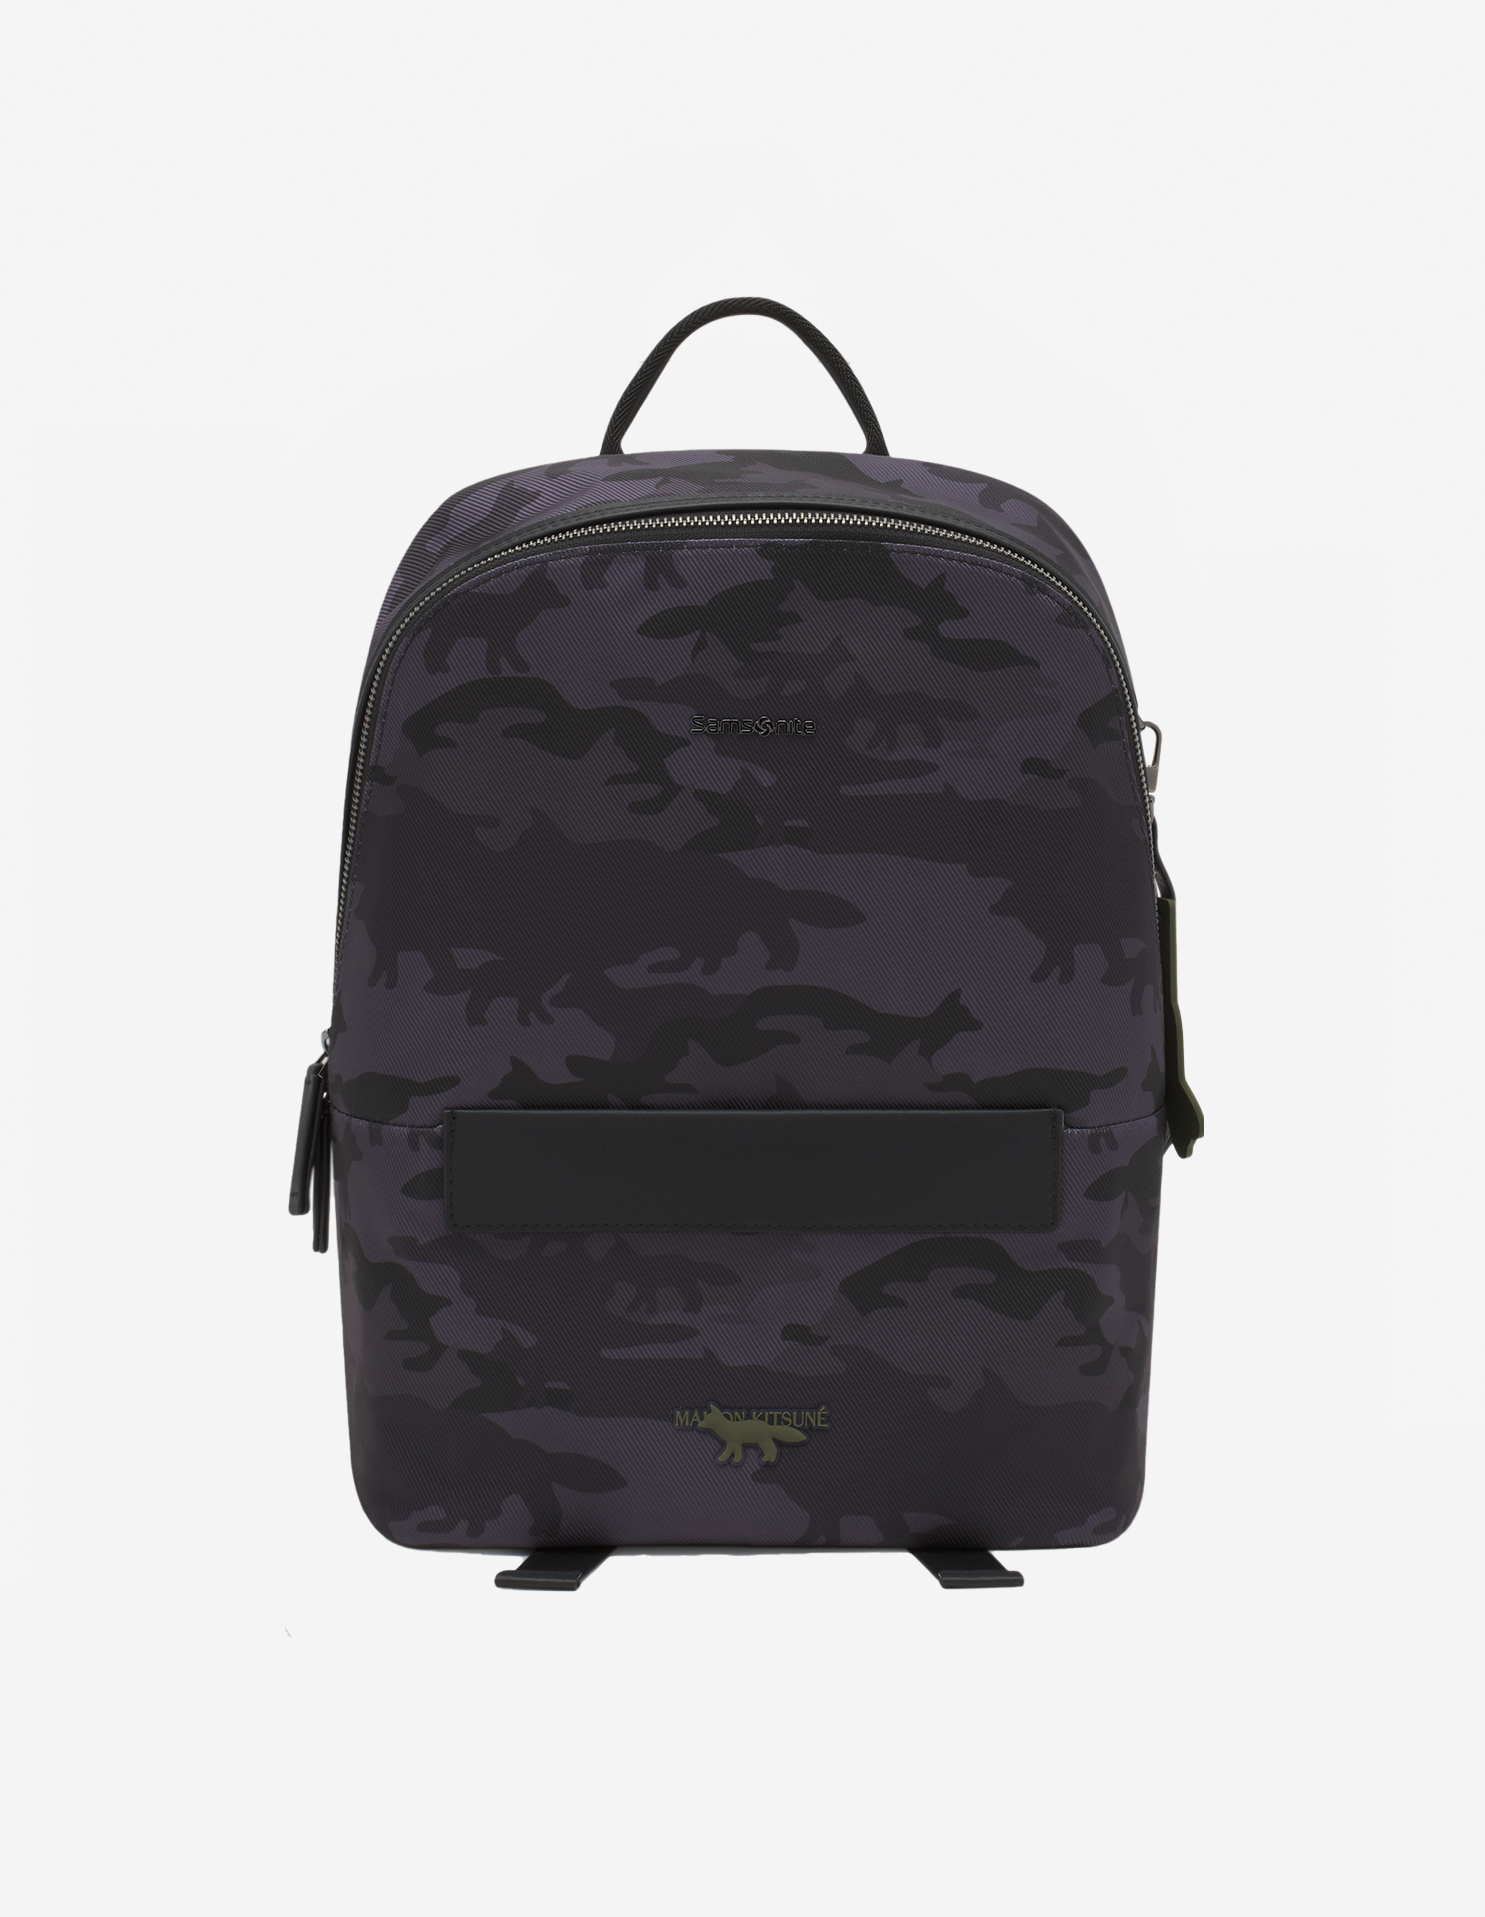 Buy Samsonite Laptop Backpack for Women | Veron II Regular Backpack |  Office Bag for Men | Travel Backpack | Laptop Backpack, Black at Amazon.in